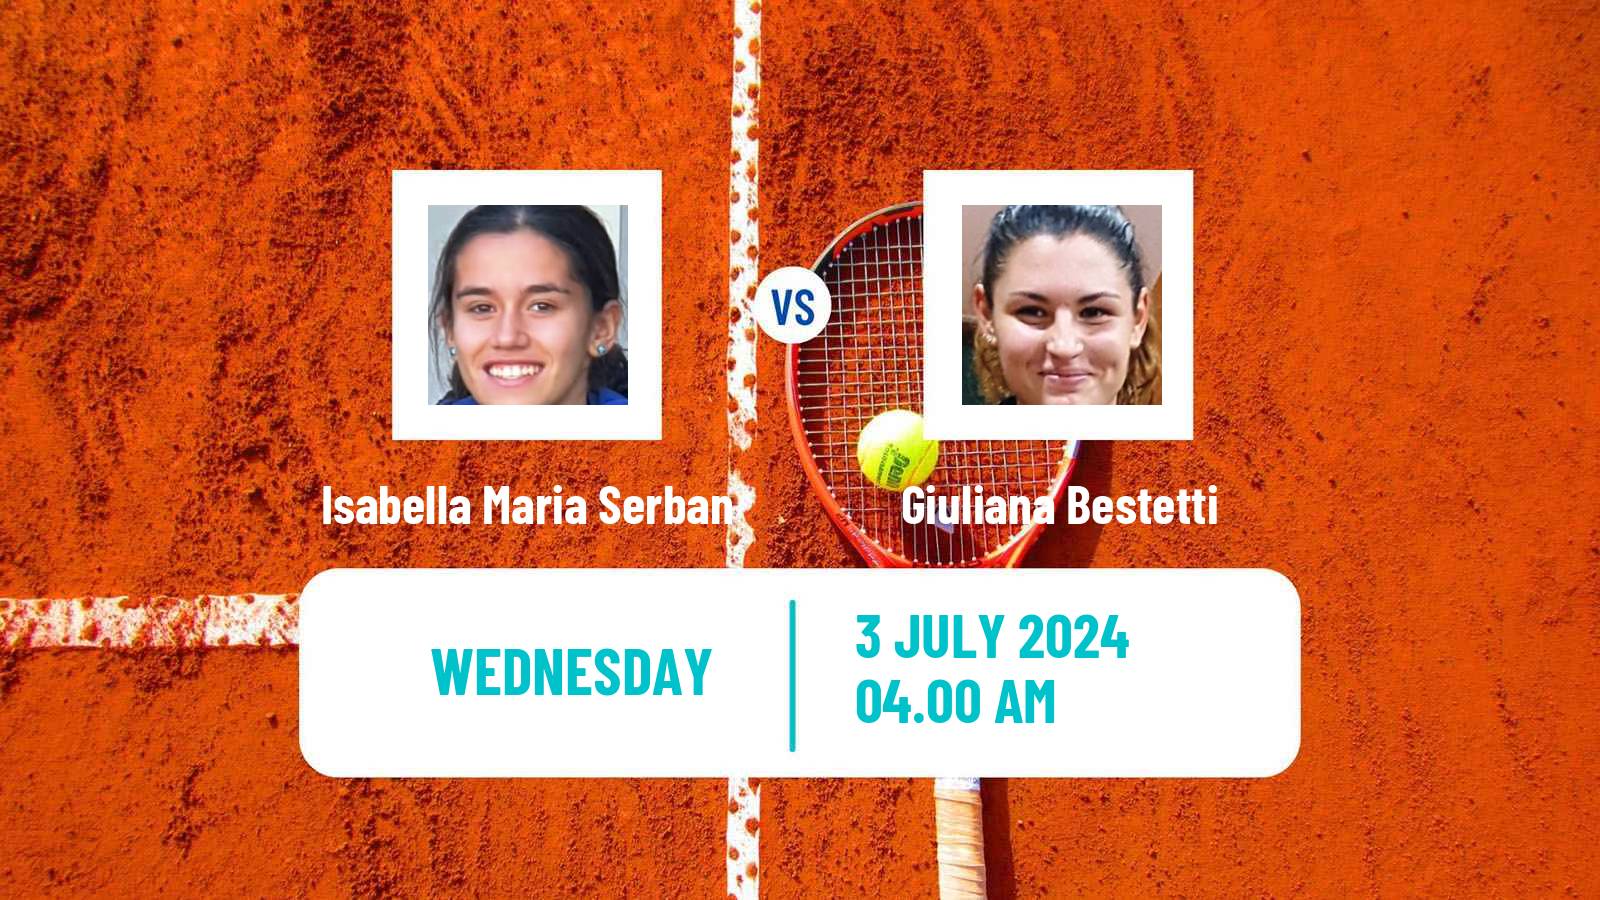 Tennis ITF W15 Galati 2 Women Isabella Maria Serban - Giuliana Bestetti